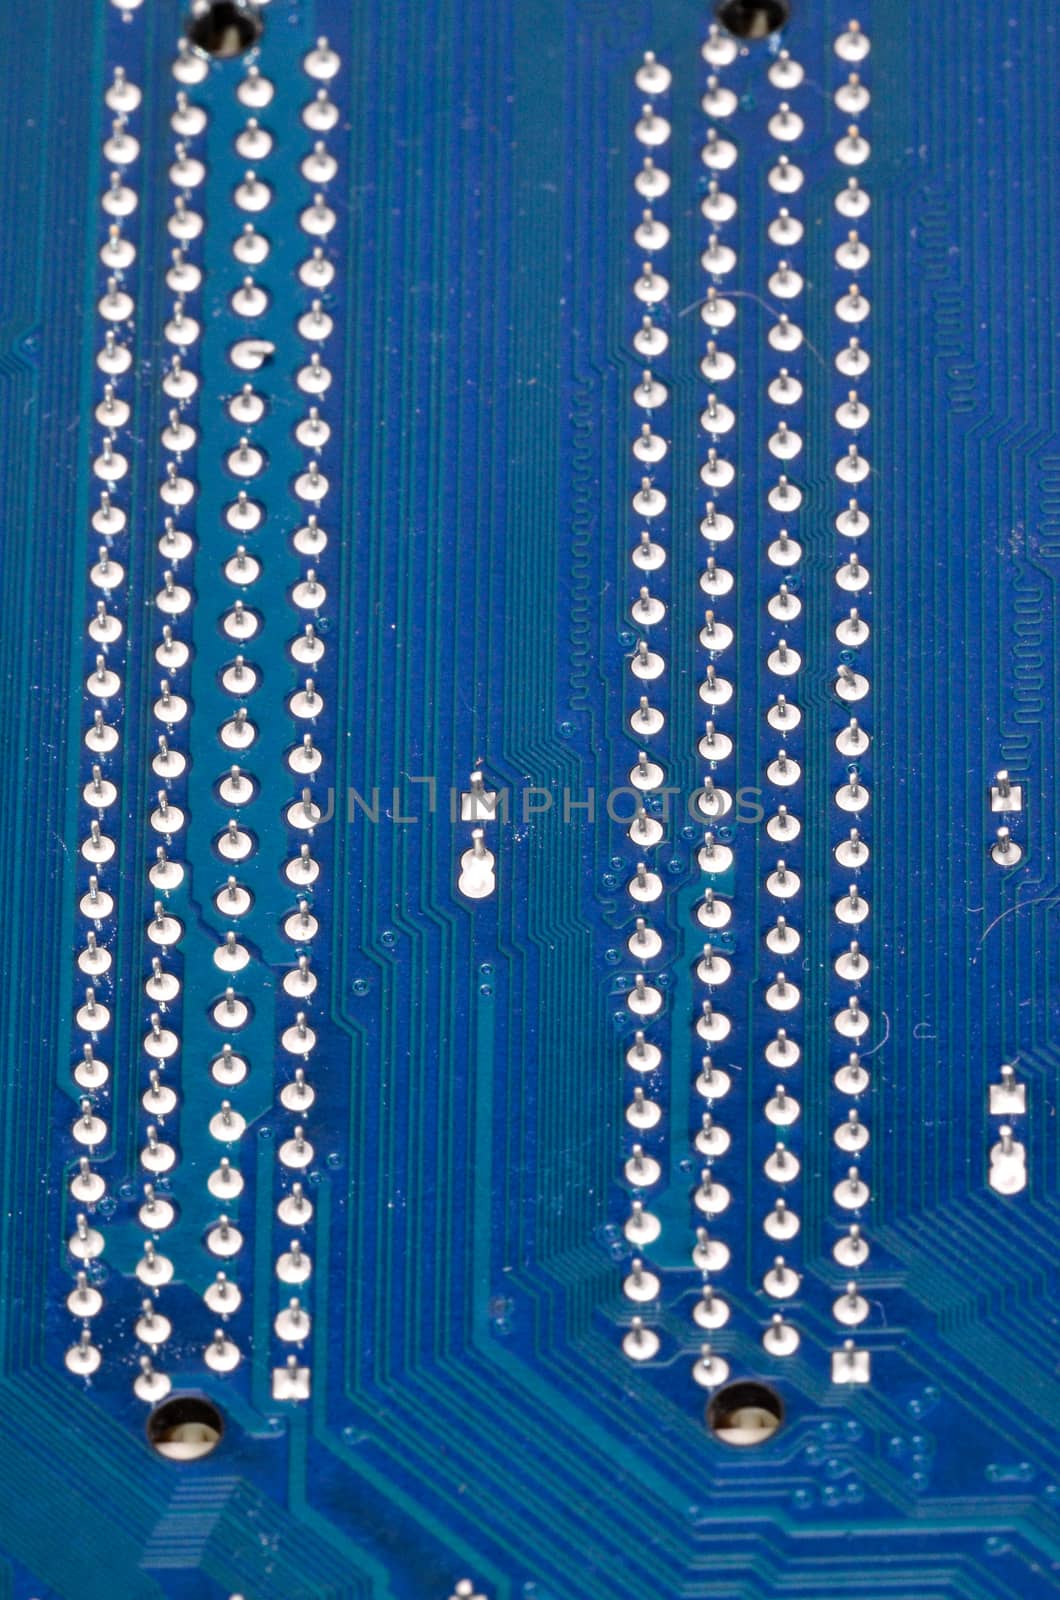 Macro Photo Of Electronic Circuit. Pcb On The Lighting.